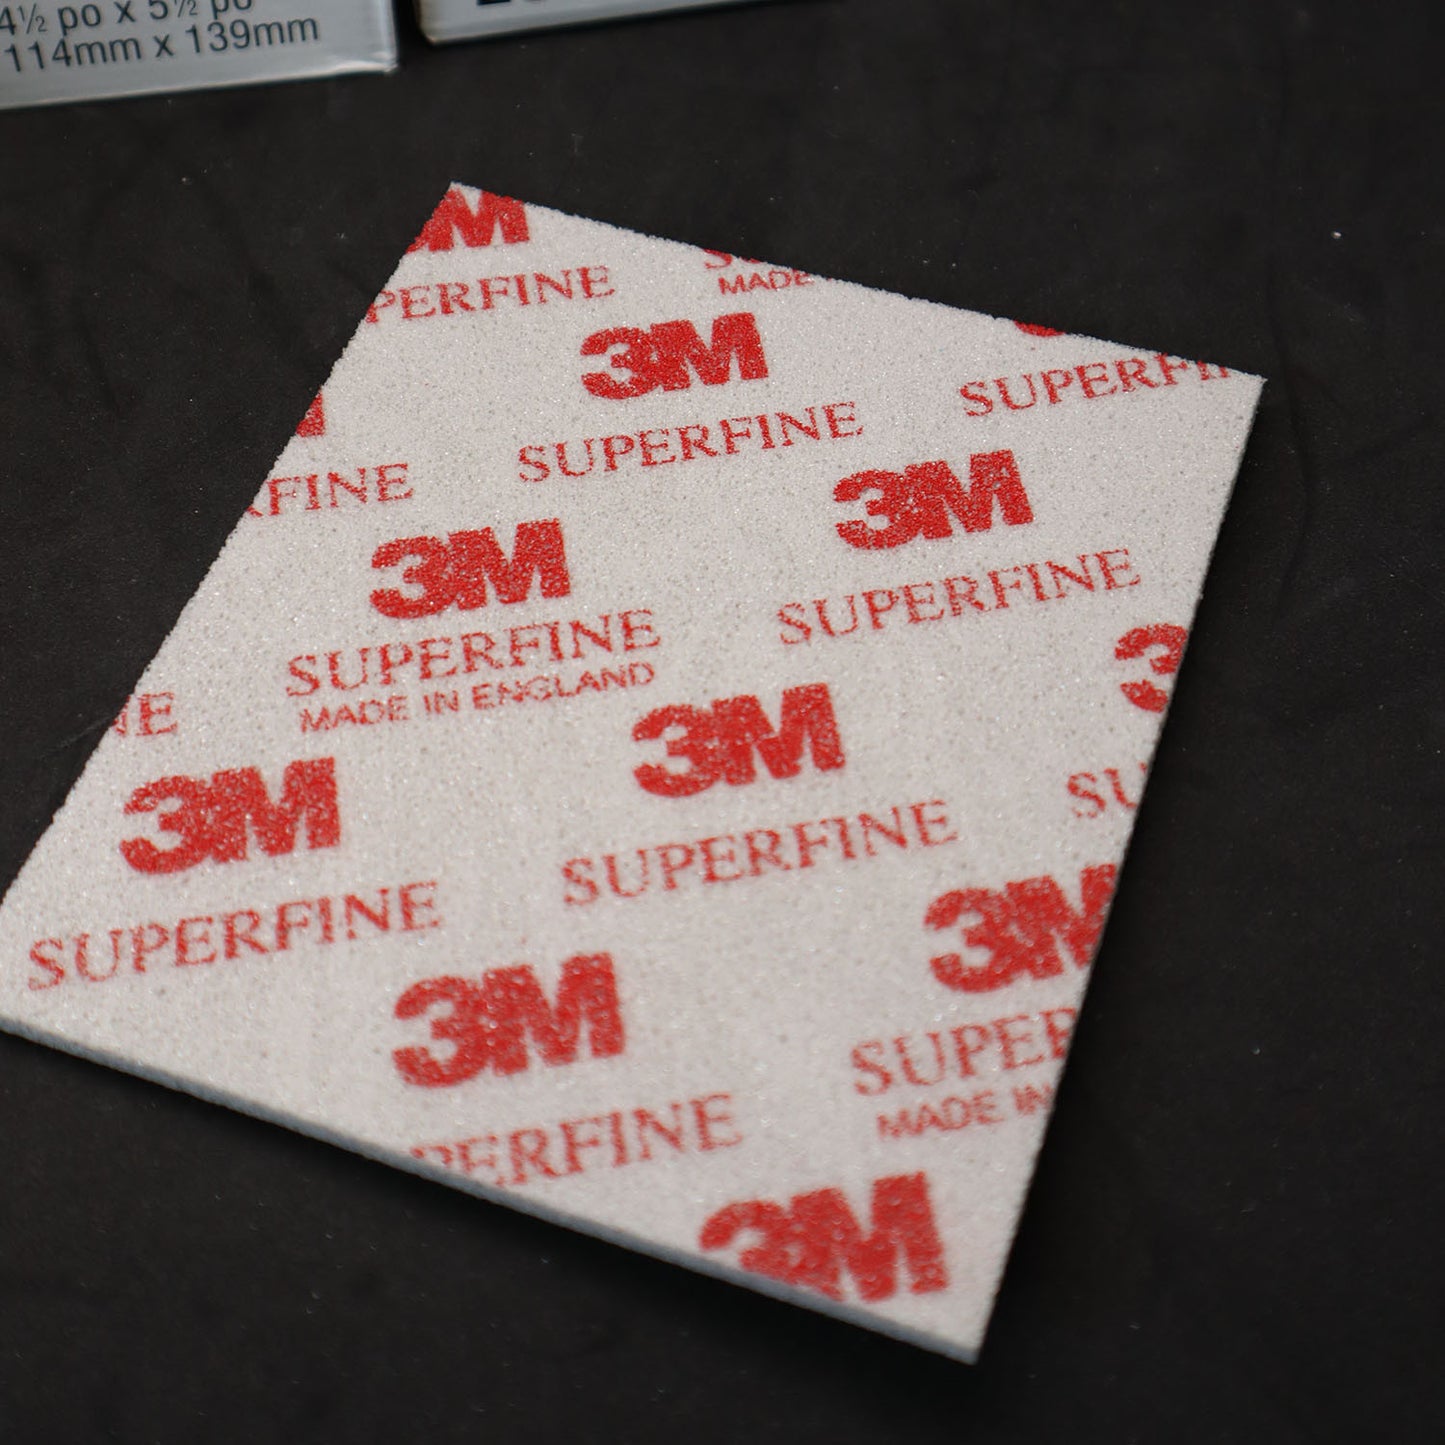 3M Sanding Sponge (superfine / microfine / ultrafine)